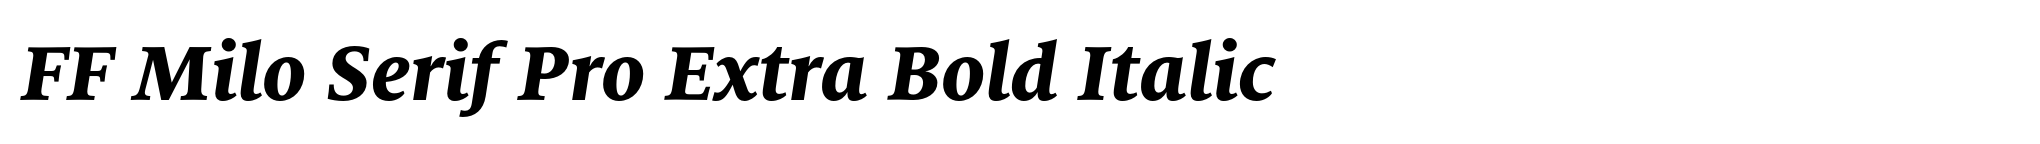 FF Milo Serif Pro Extra Bold Italic image